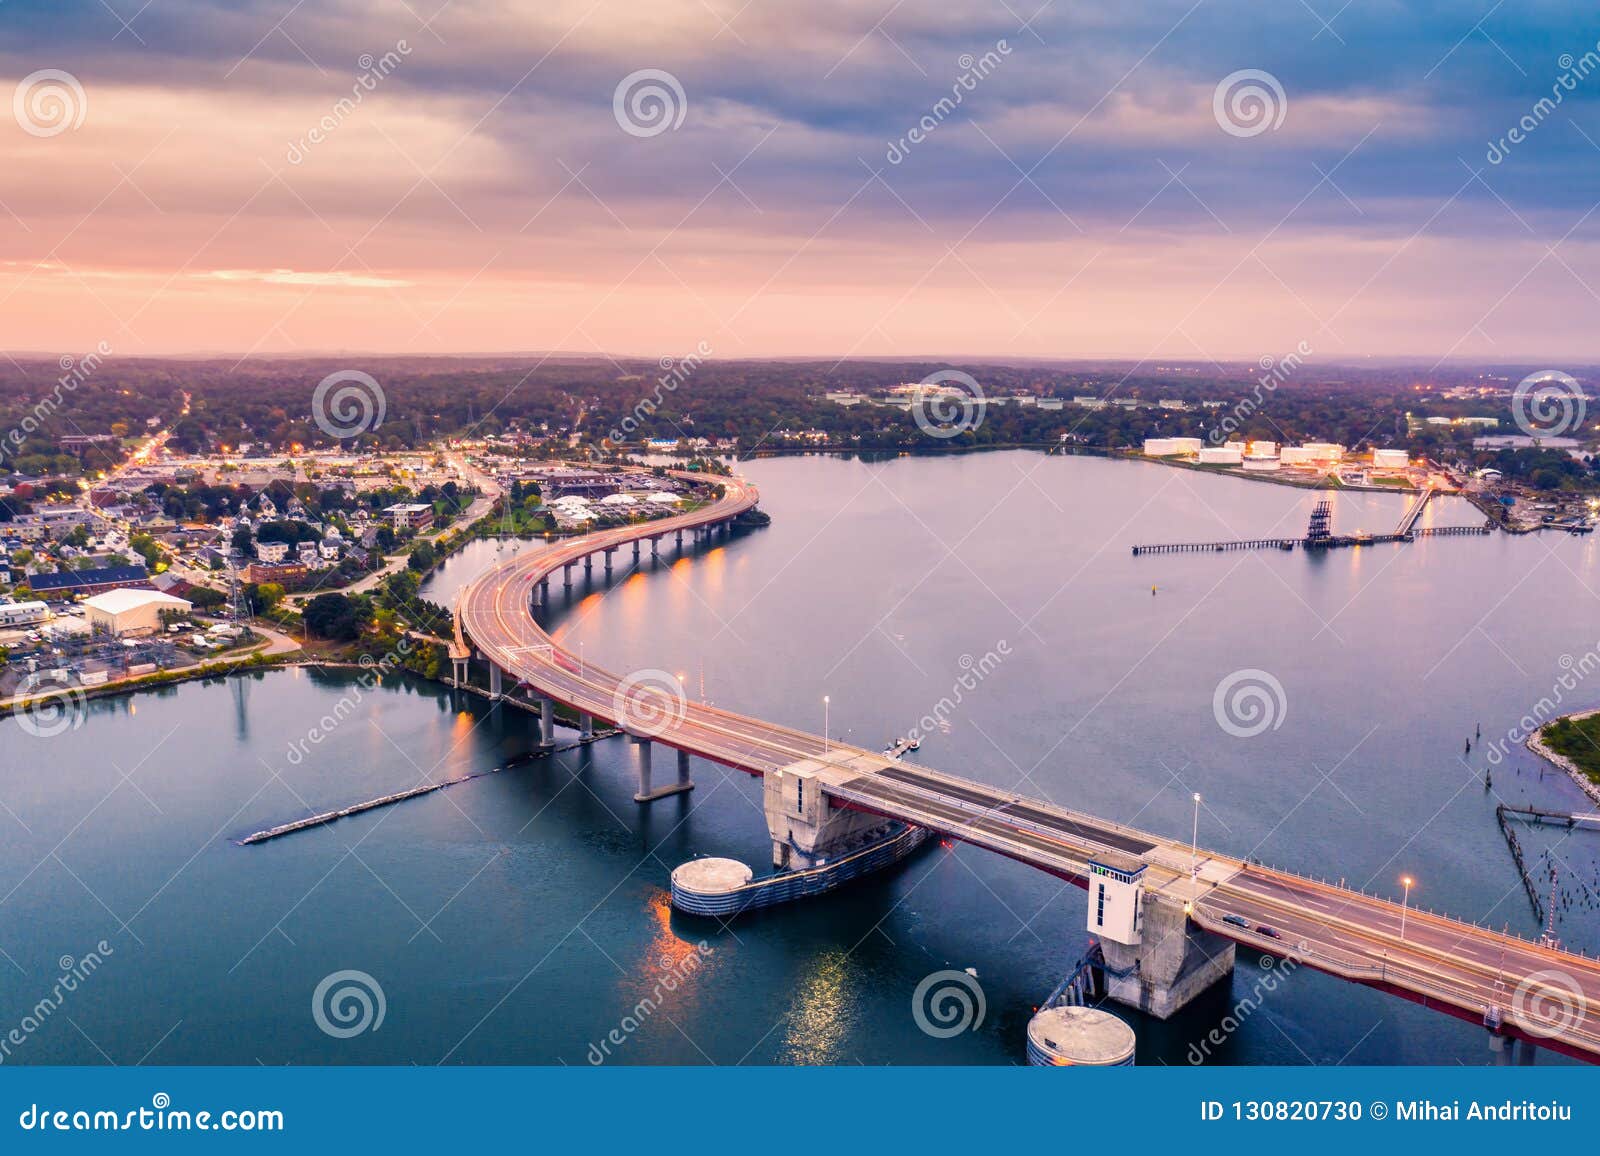 casco bay bridge in portland, maine